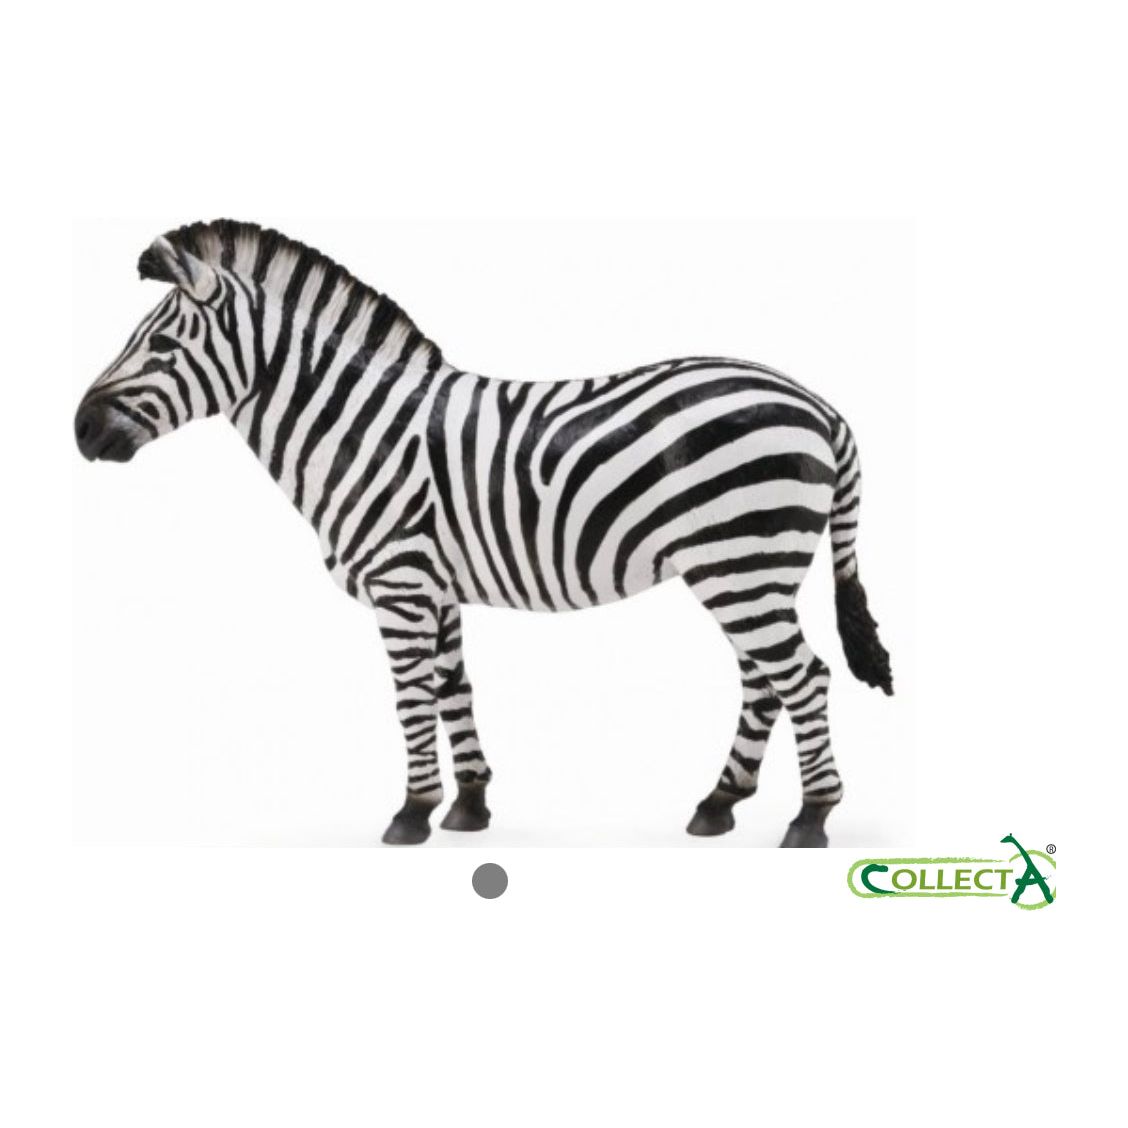 Zebra Collecta toy